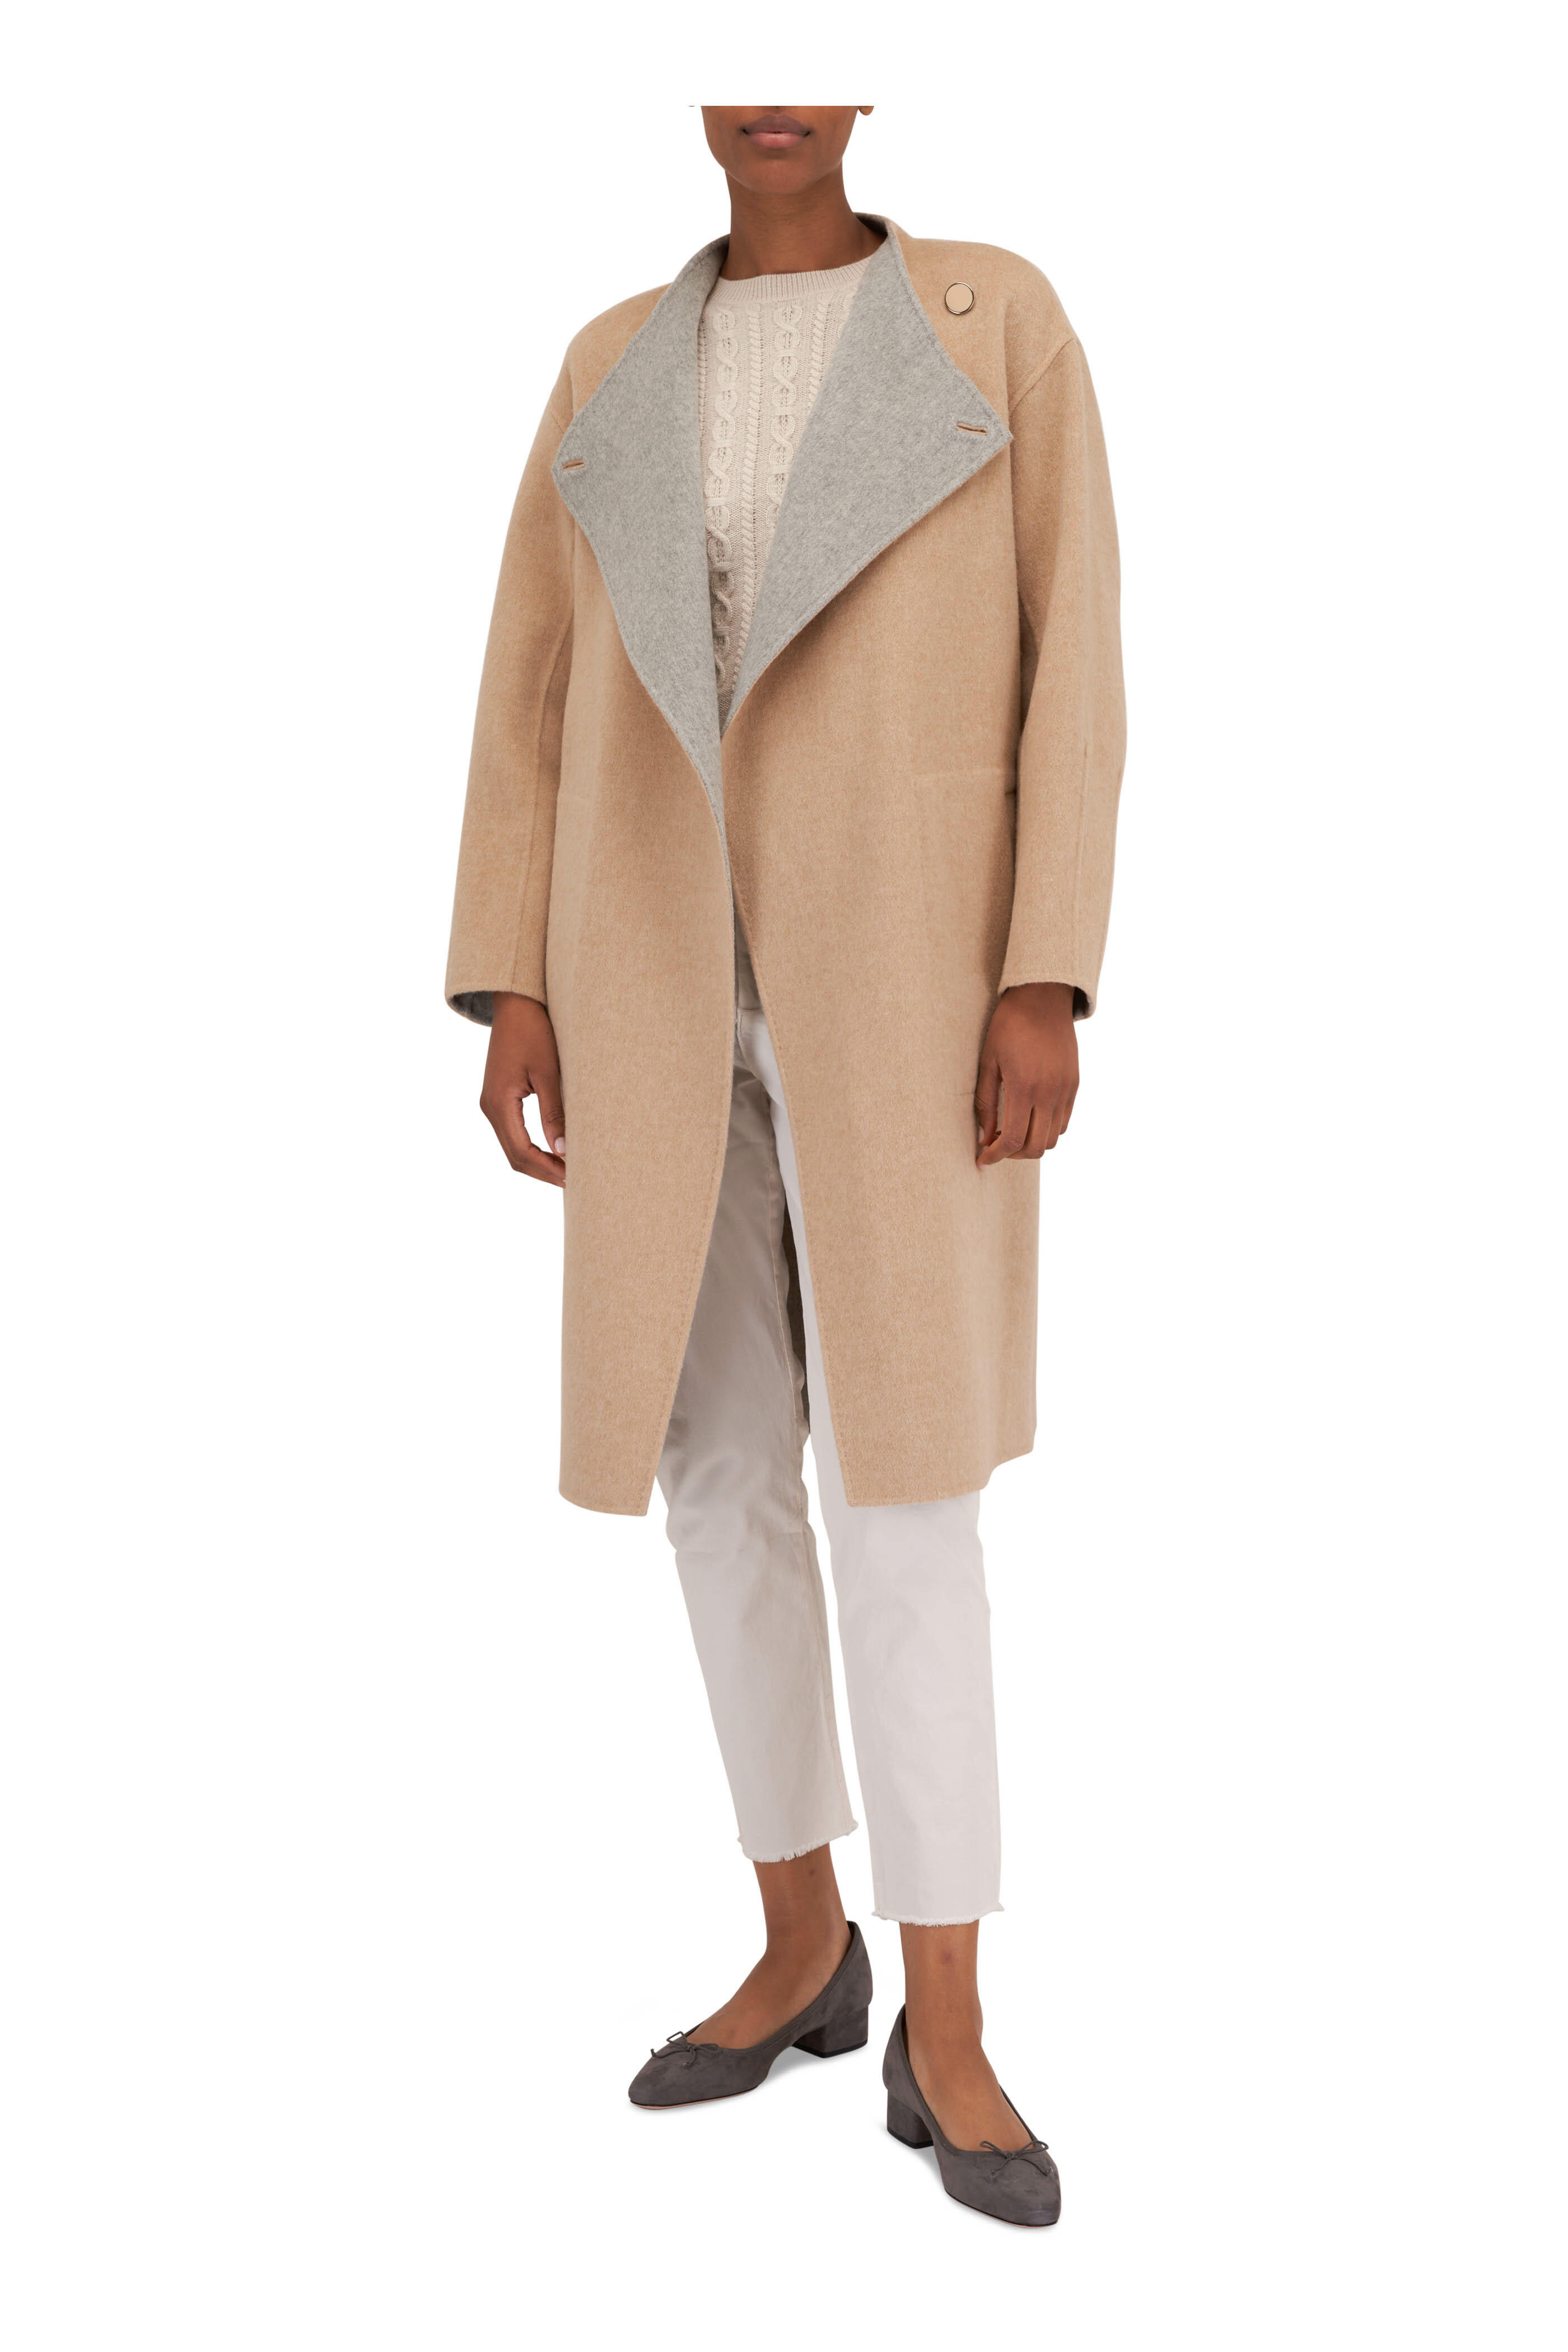 Lafayette 148 New York - Dune & Heather Gray Double-Faced Wool Coat